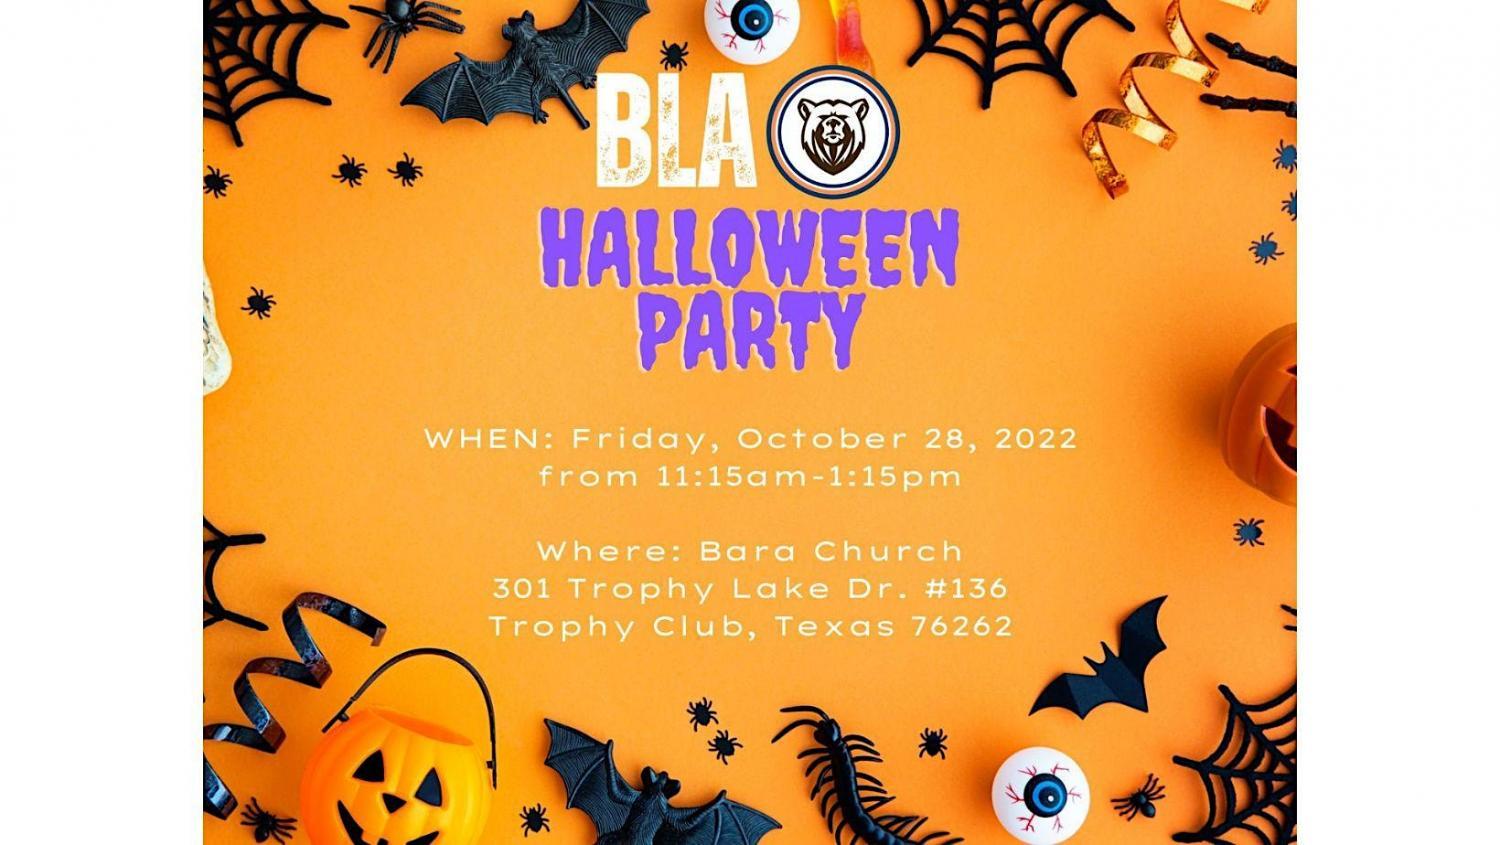 BLA Homeschool Halloween Party
Fri Oct 28, 11:15 AM - Fri Oct 28, 1:15 PM
in 7 days